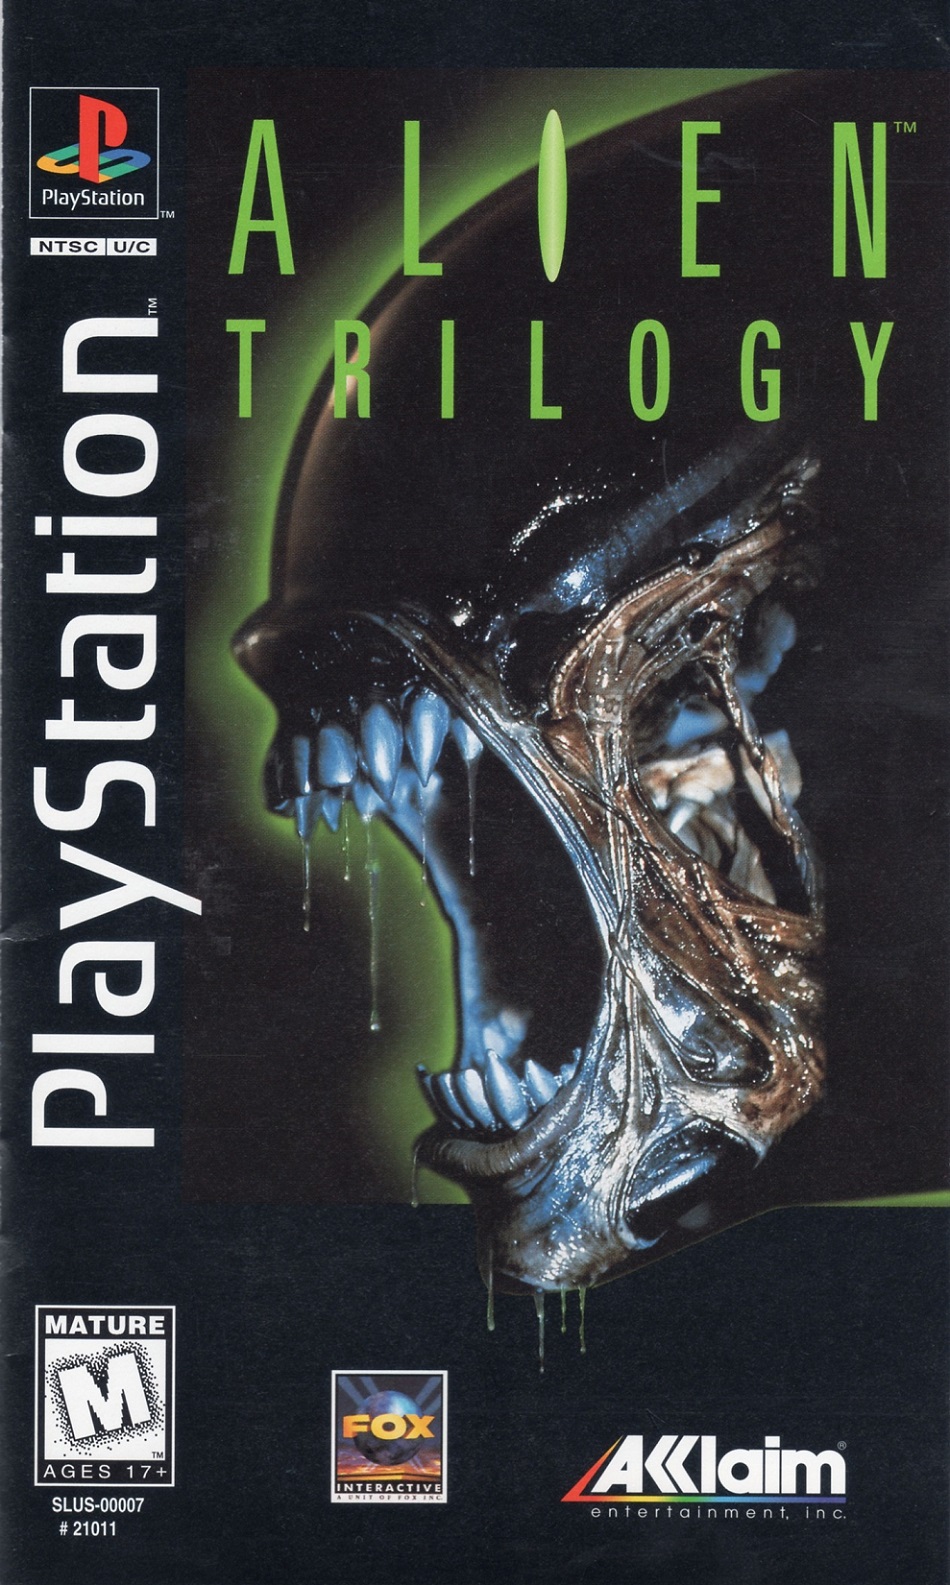 download alien trilogy game